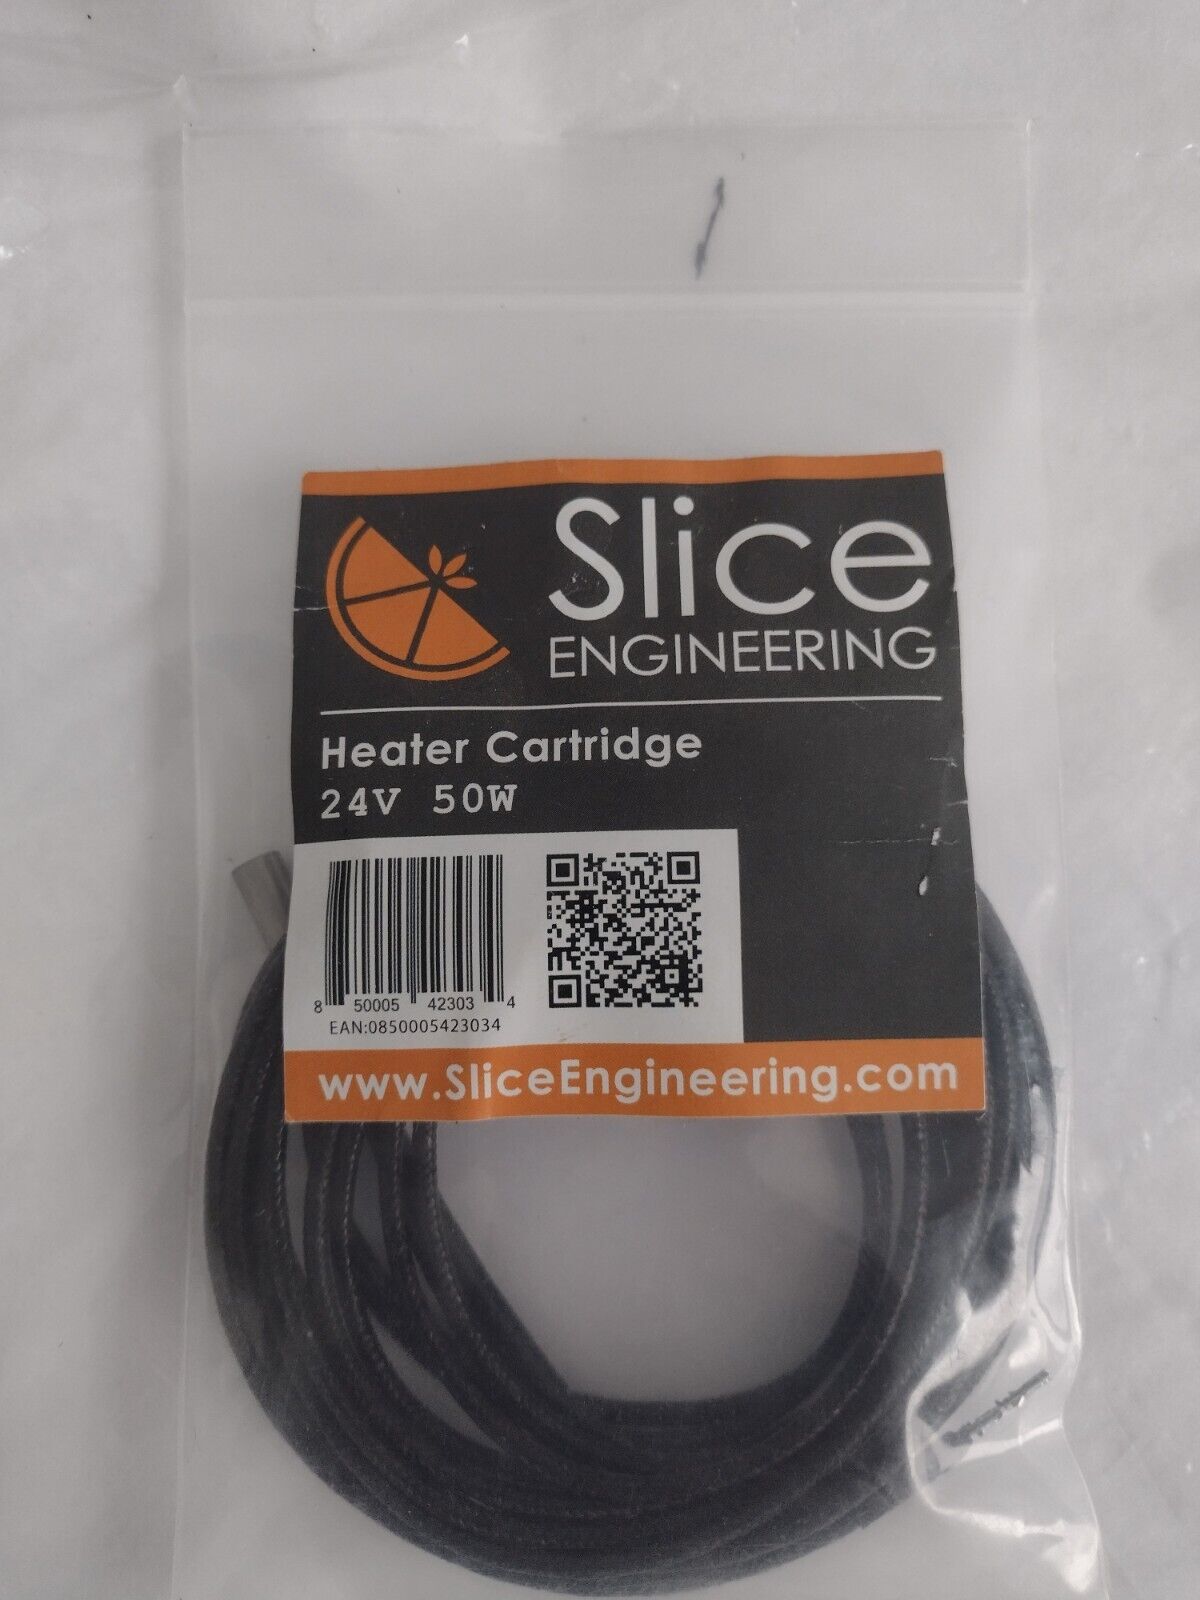 Slice Engineering 50w 24v Heater Cartridge NEW IN SEALED PACKAGING